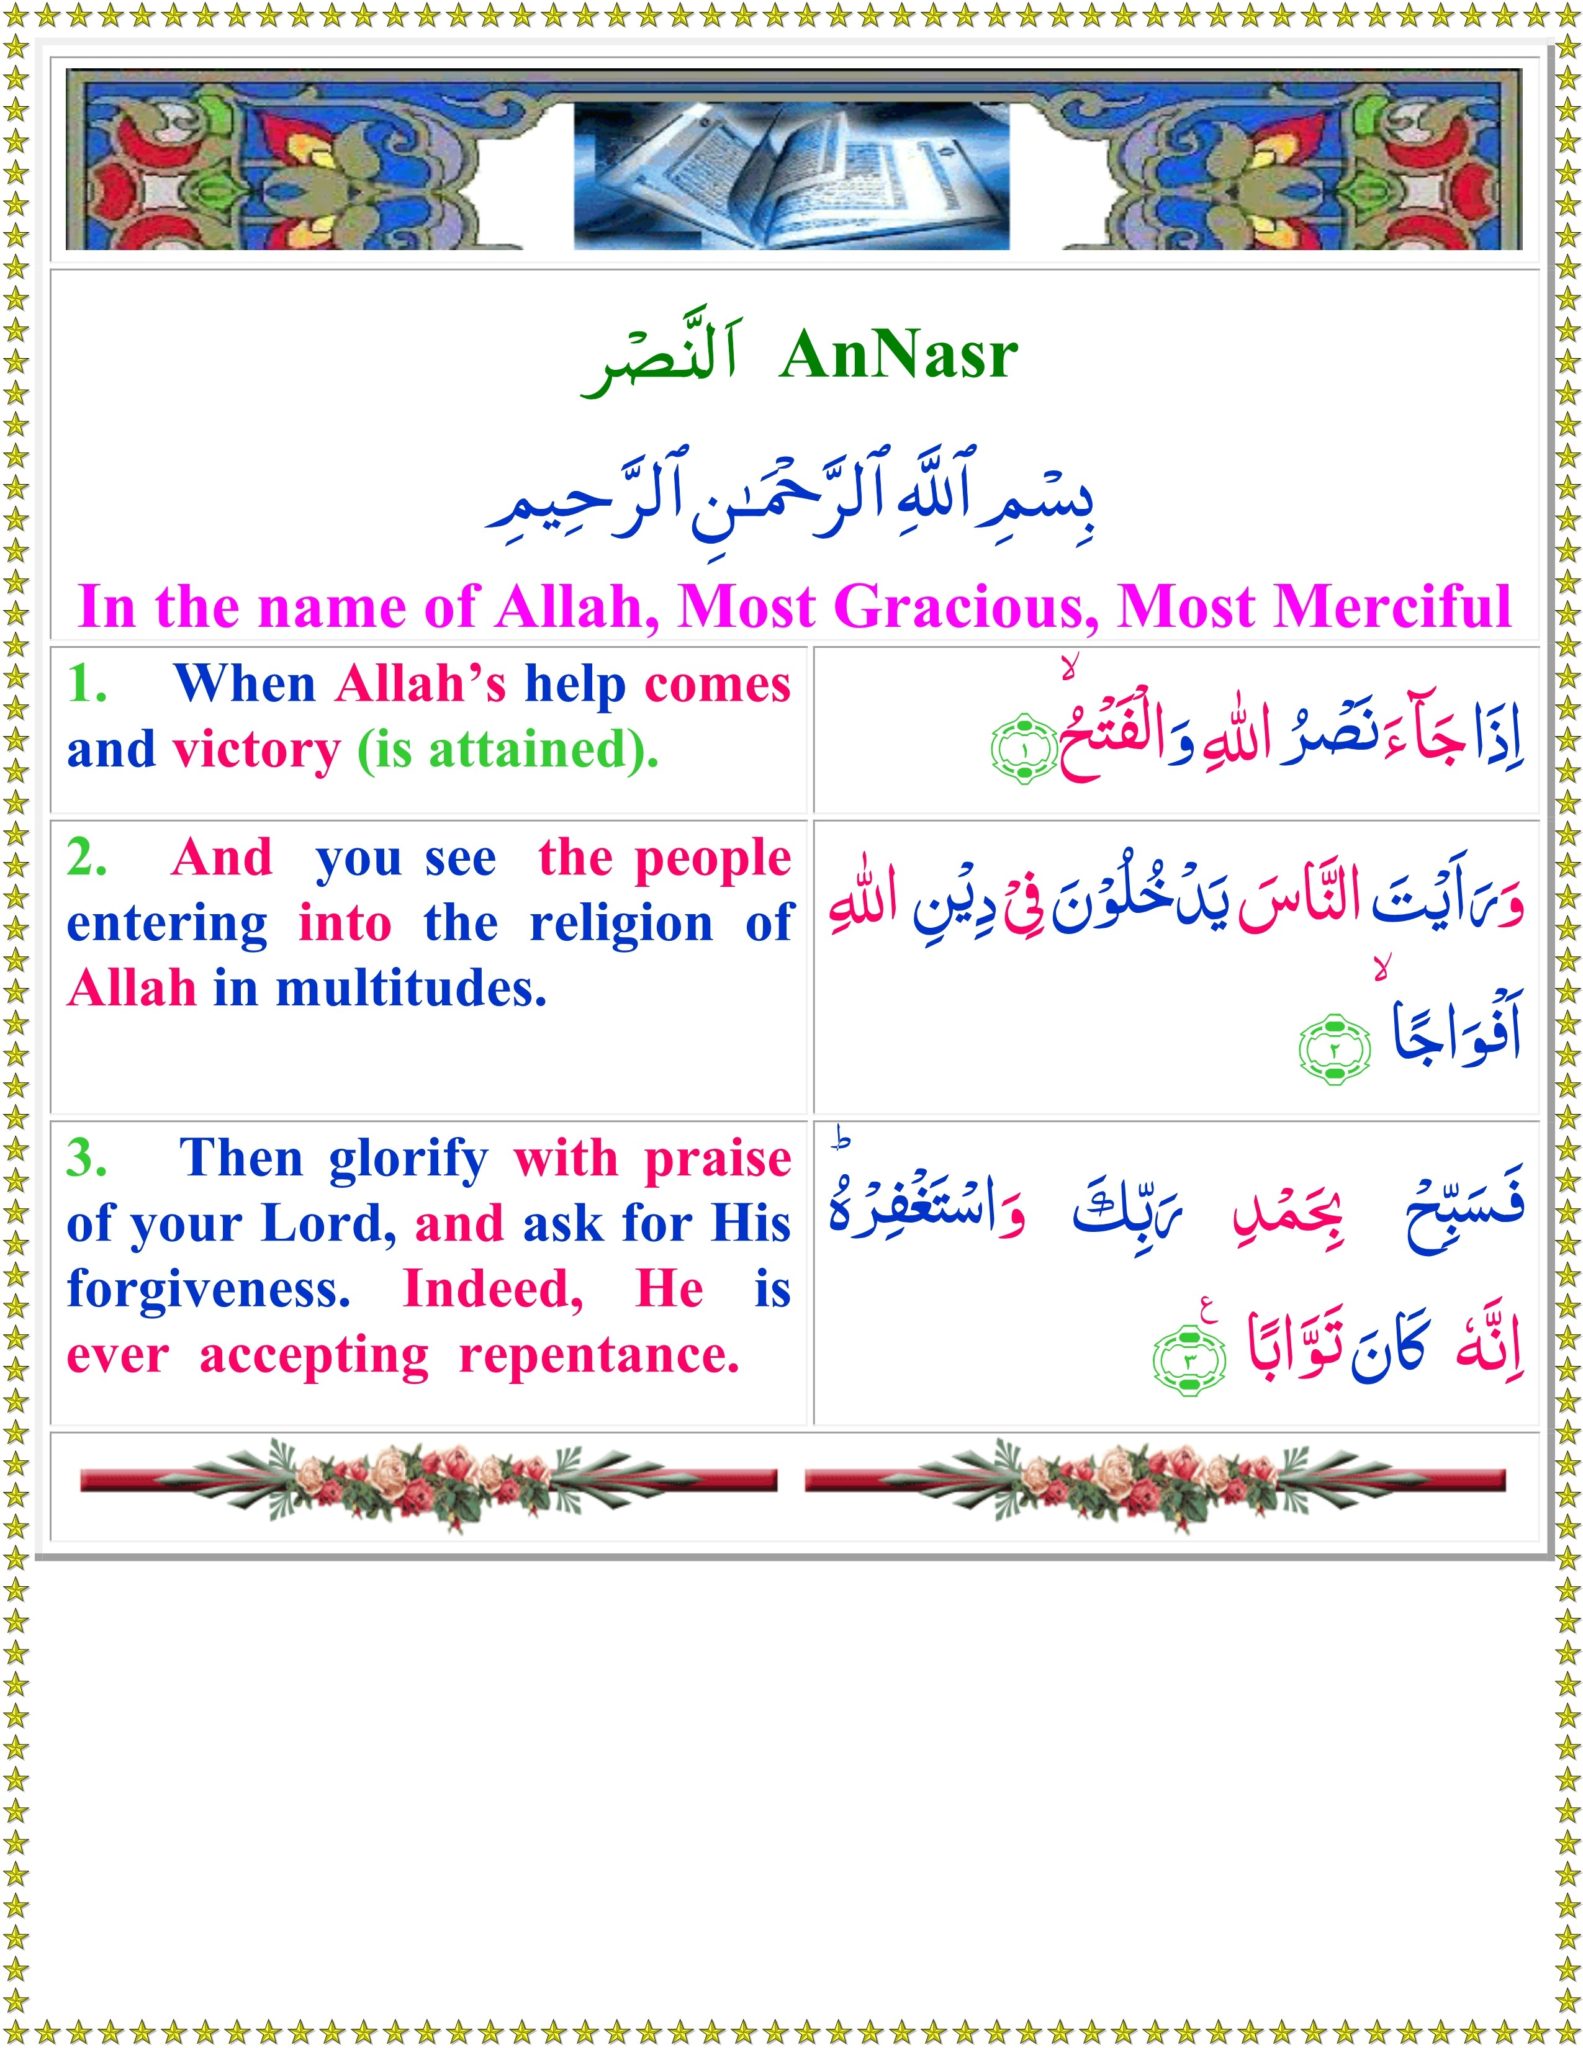 Surah Nasr translation in English